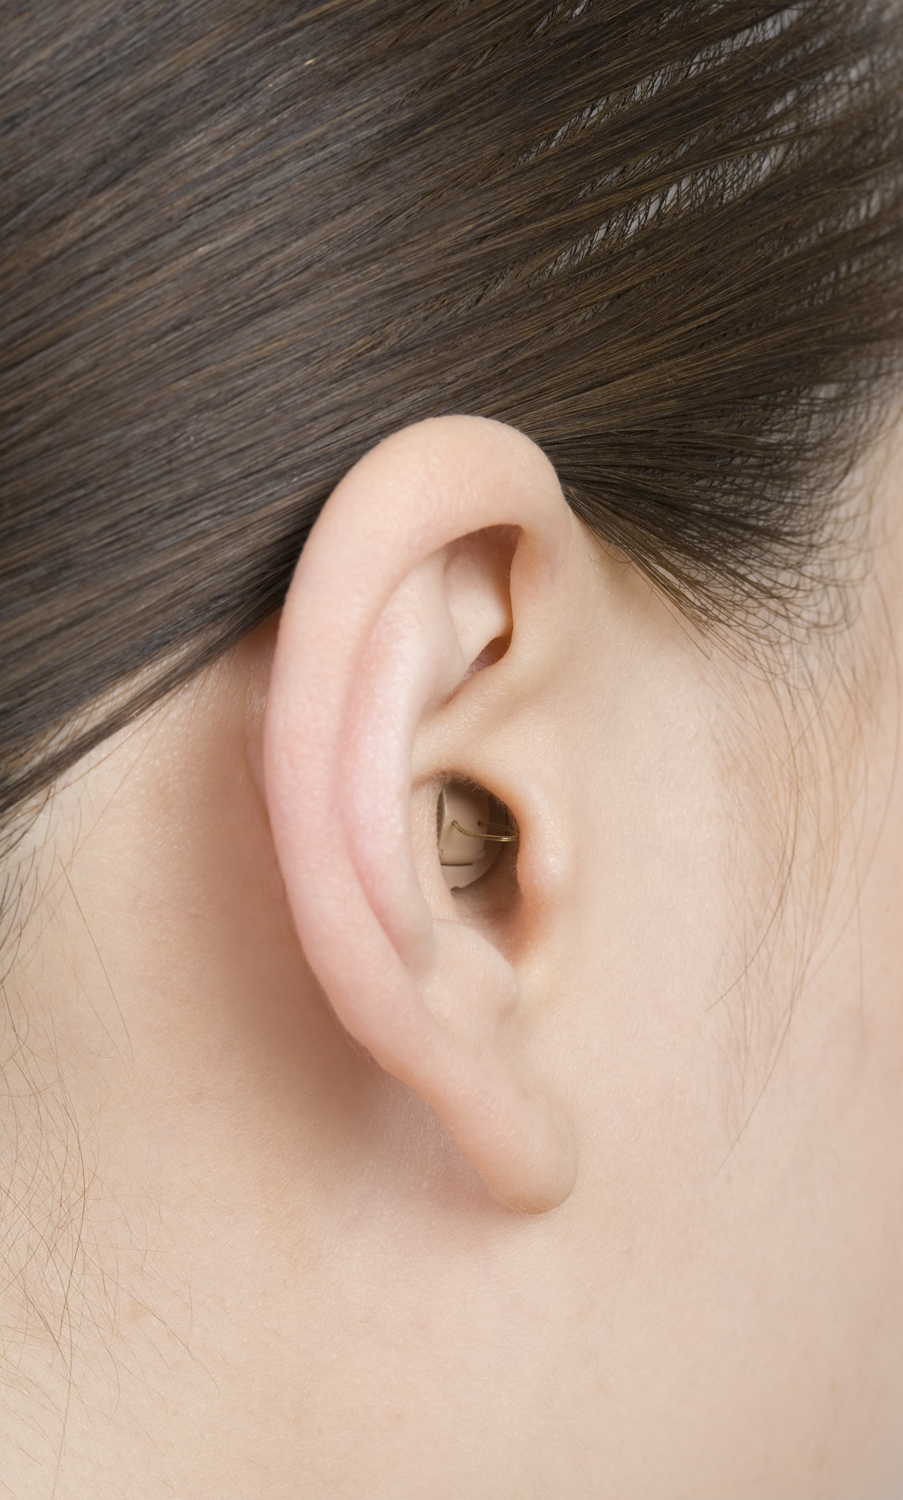 CB1830 N リオネット補聴器 耳かけ形補聴器 HB-D7C 品 定価 ￥７２０００ - 看護、介護用品